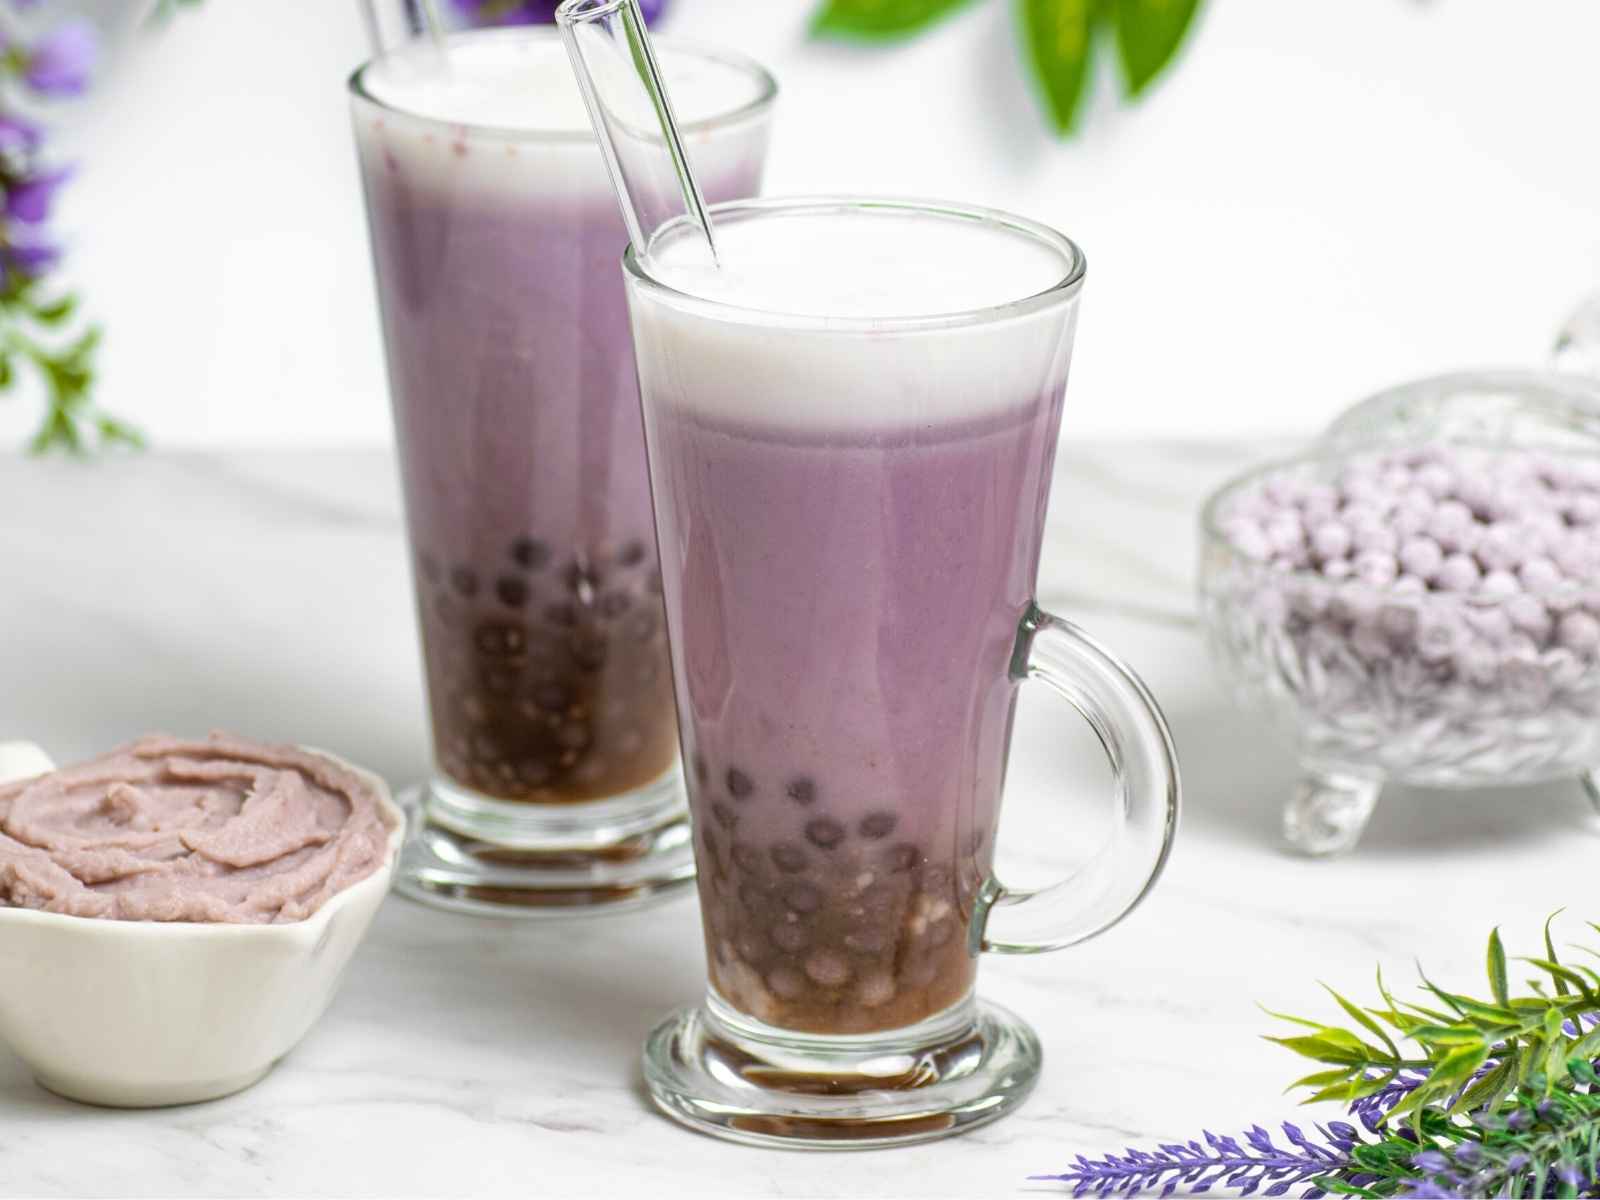 Enjoy The Refreshing Taste of Taro Tea From The Lush Rainforests Of Southeast Asia